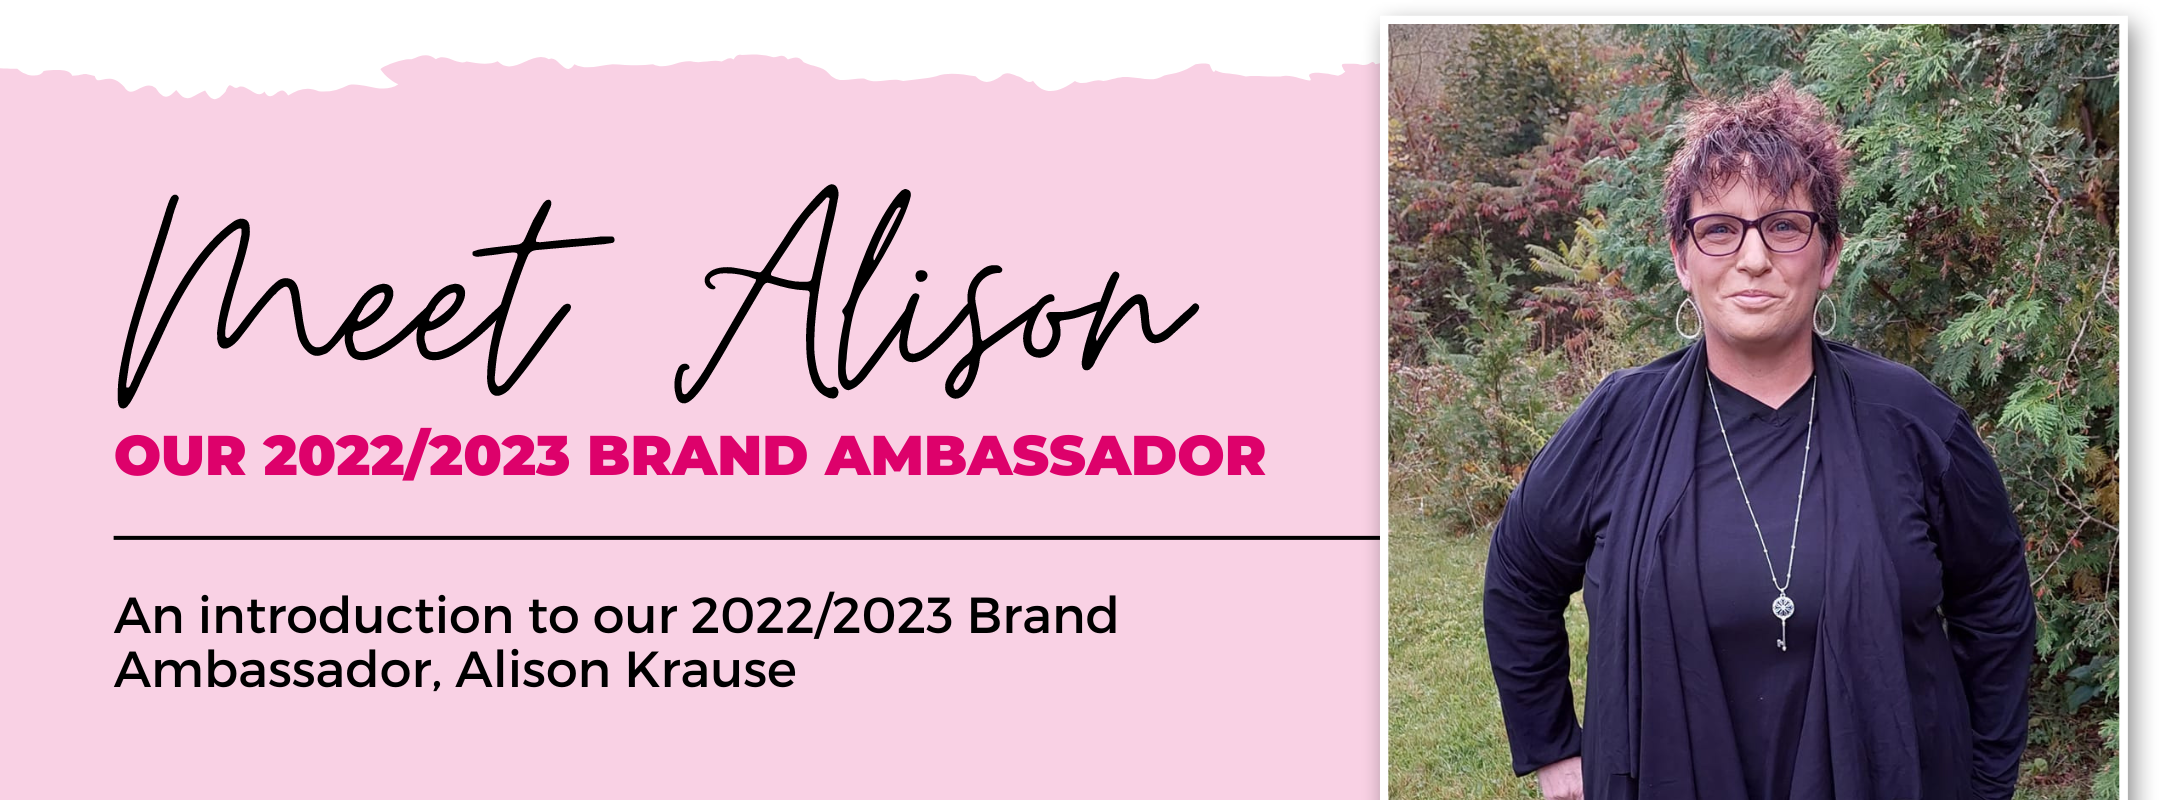 Meet Alison, Our 2022/2023 Brand Ambassador